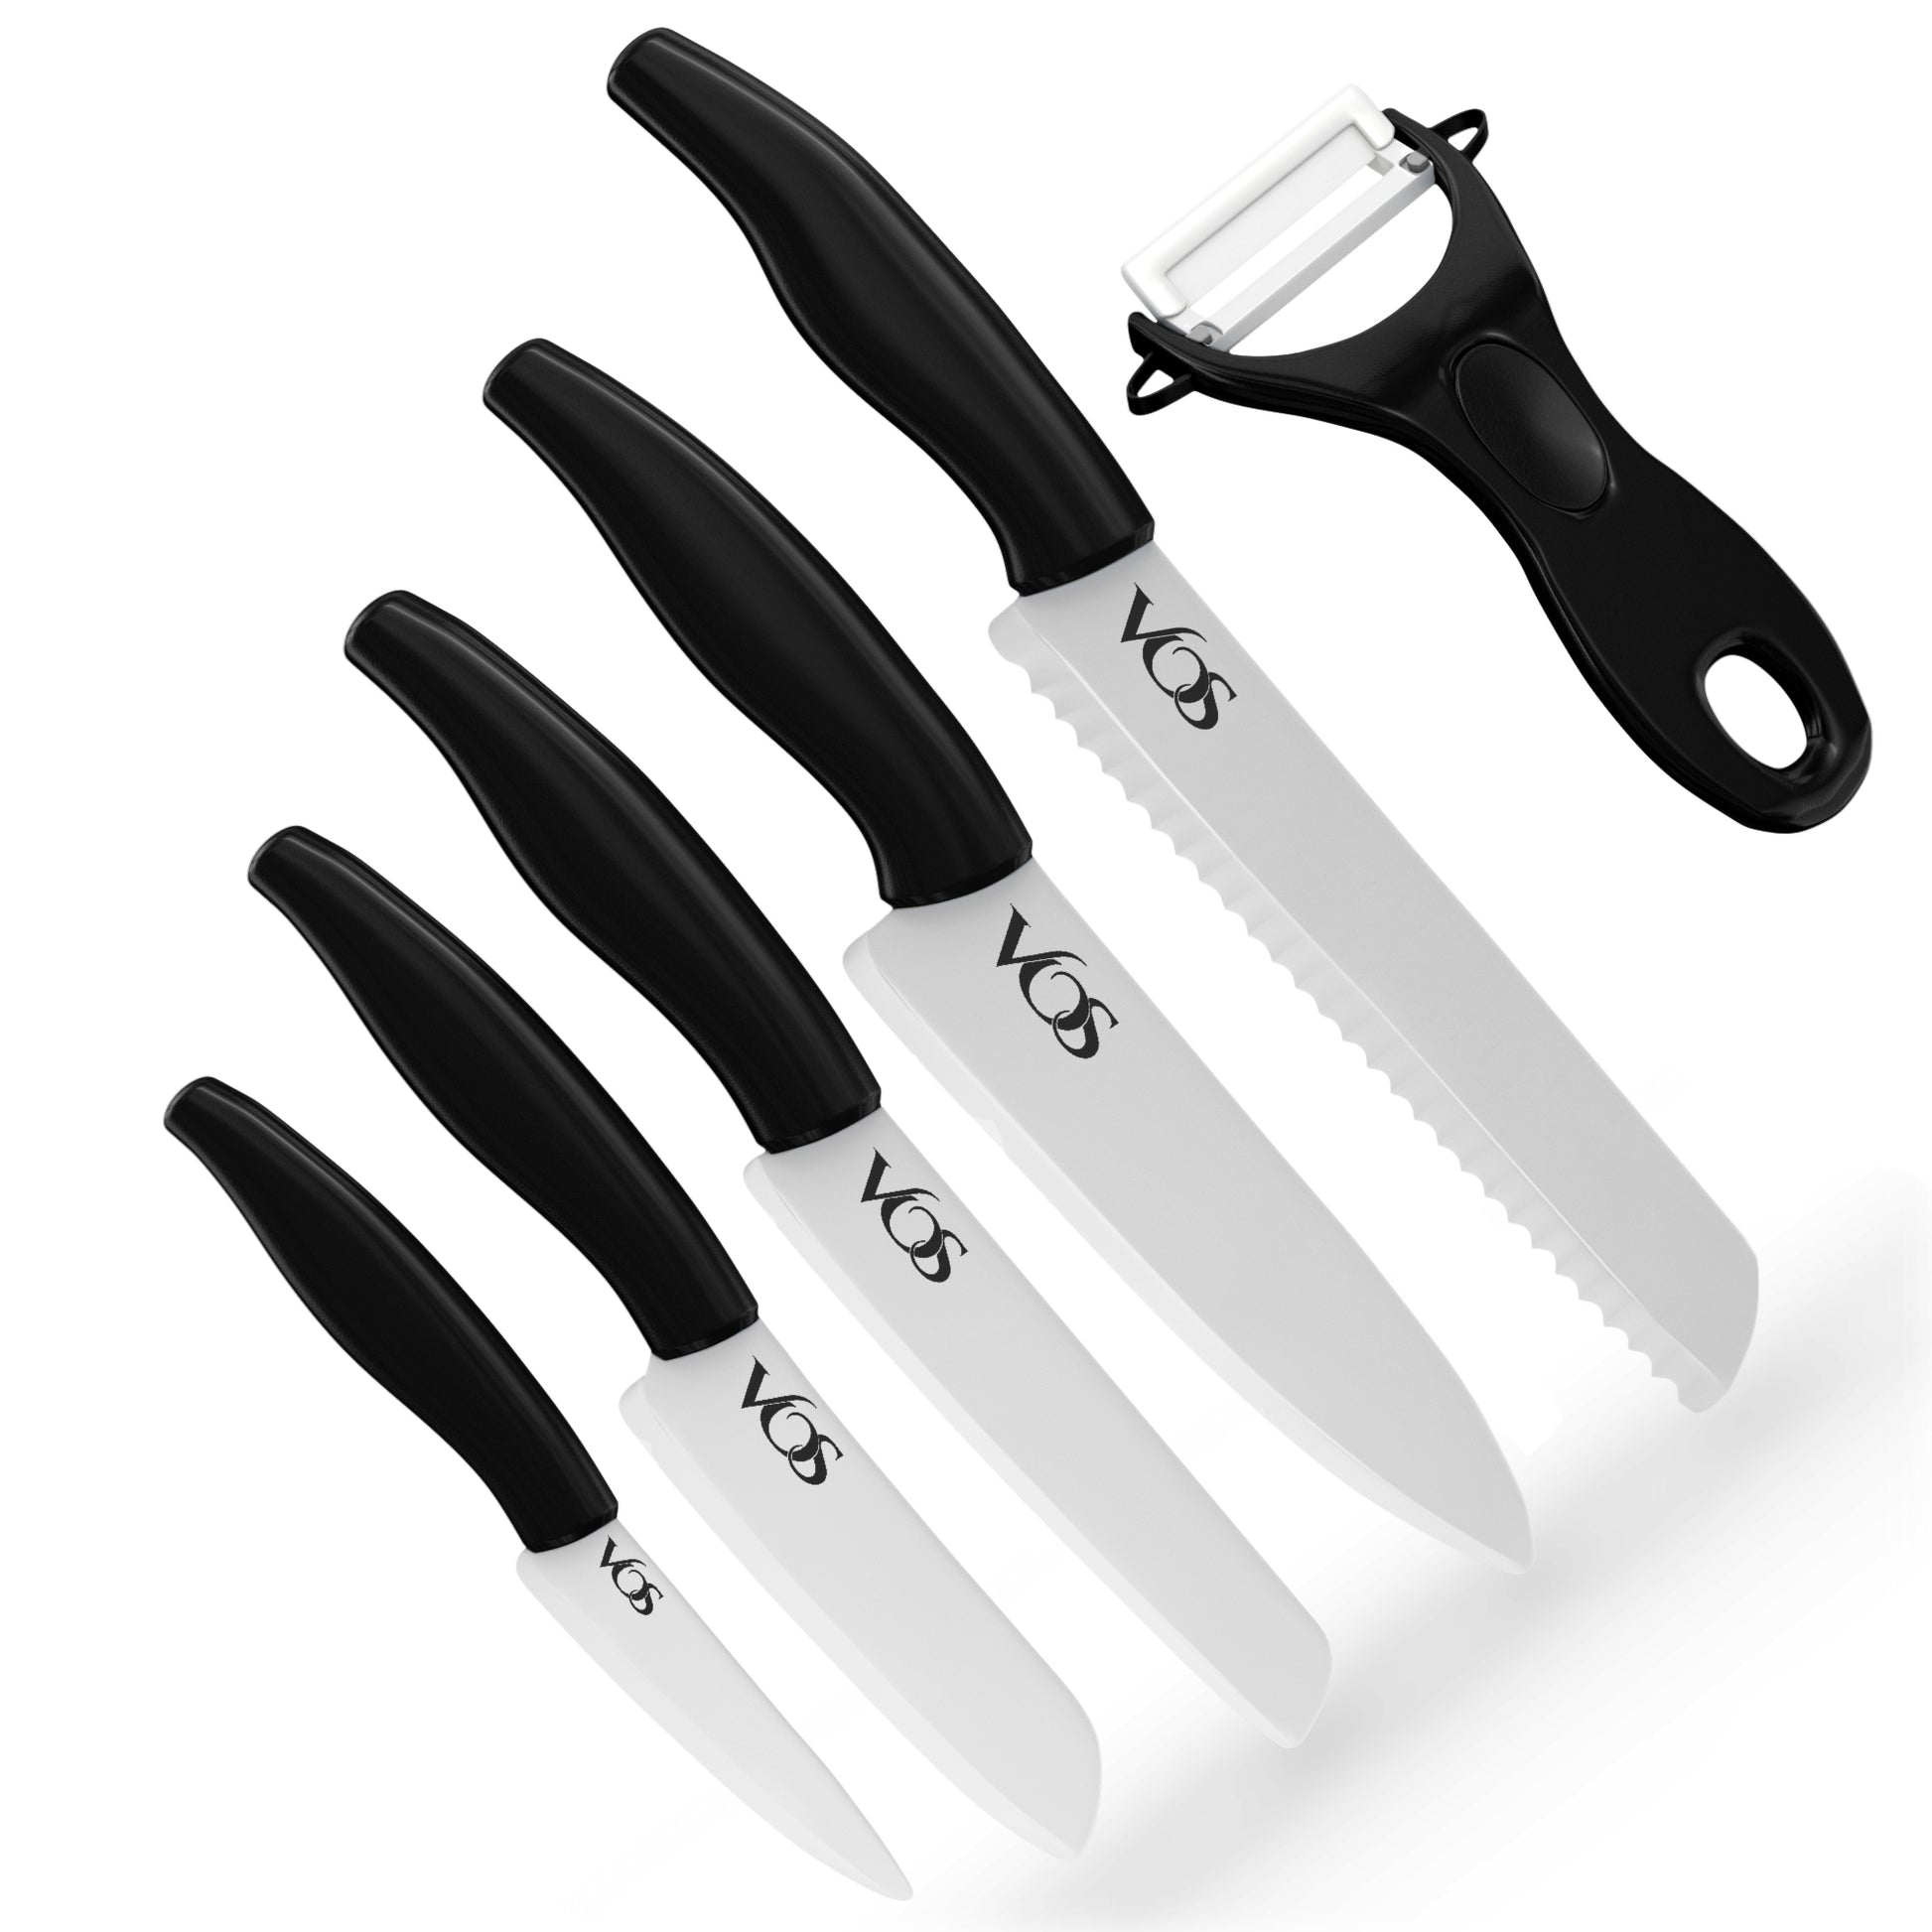 6 Piece Kitchen Knife Set with Sheaths Black Set Ceramic Knife 8